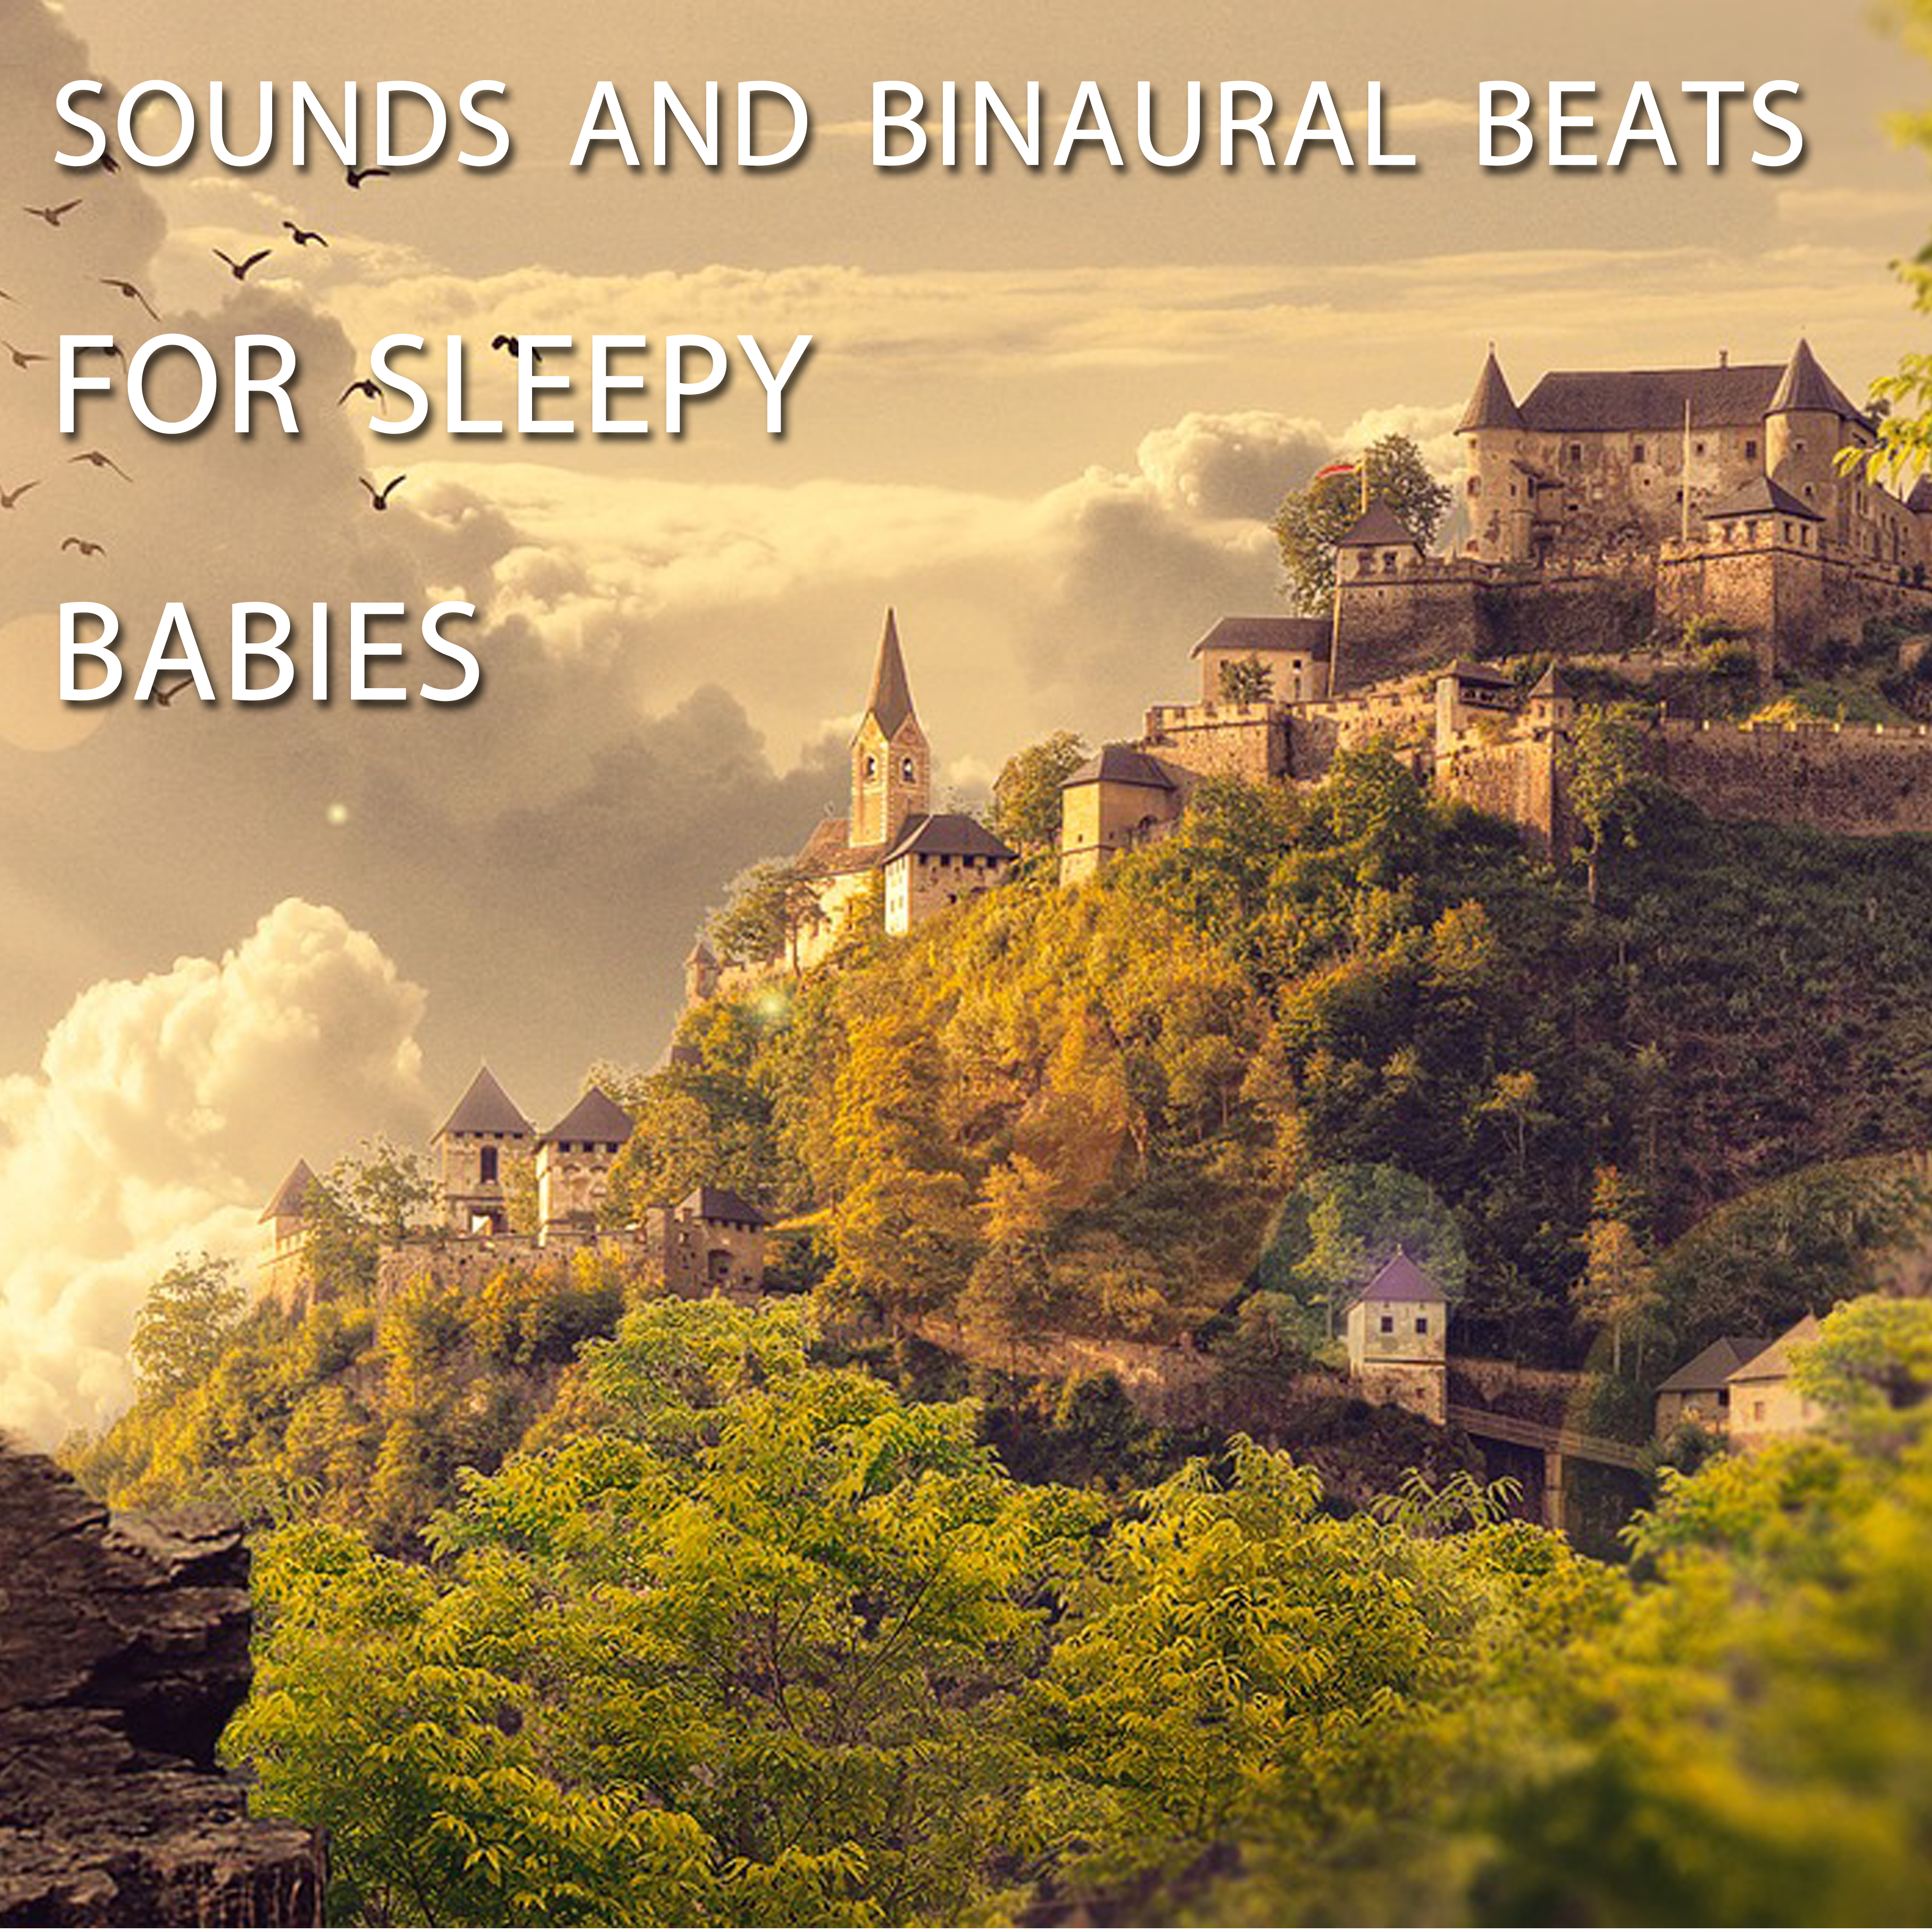 11 Sounds and Binaural Beats for Sleepy Babies